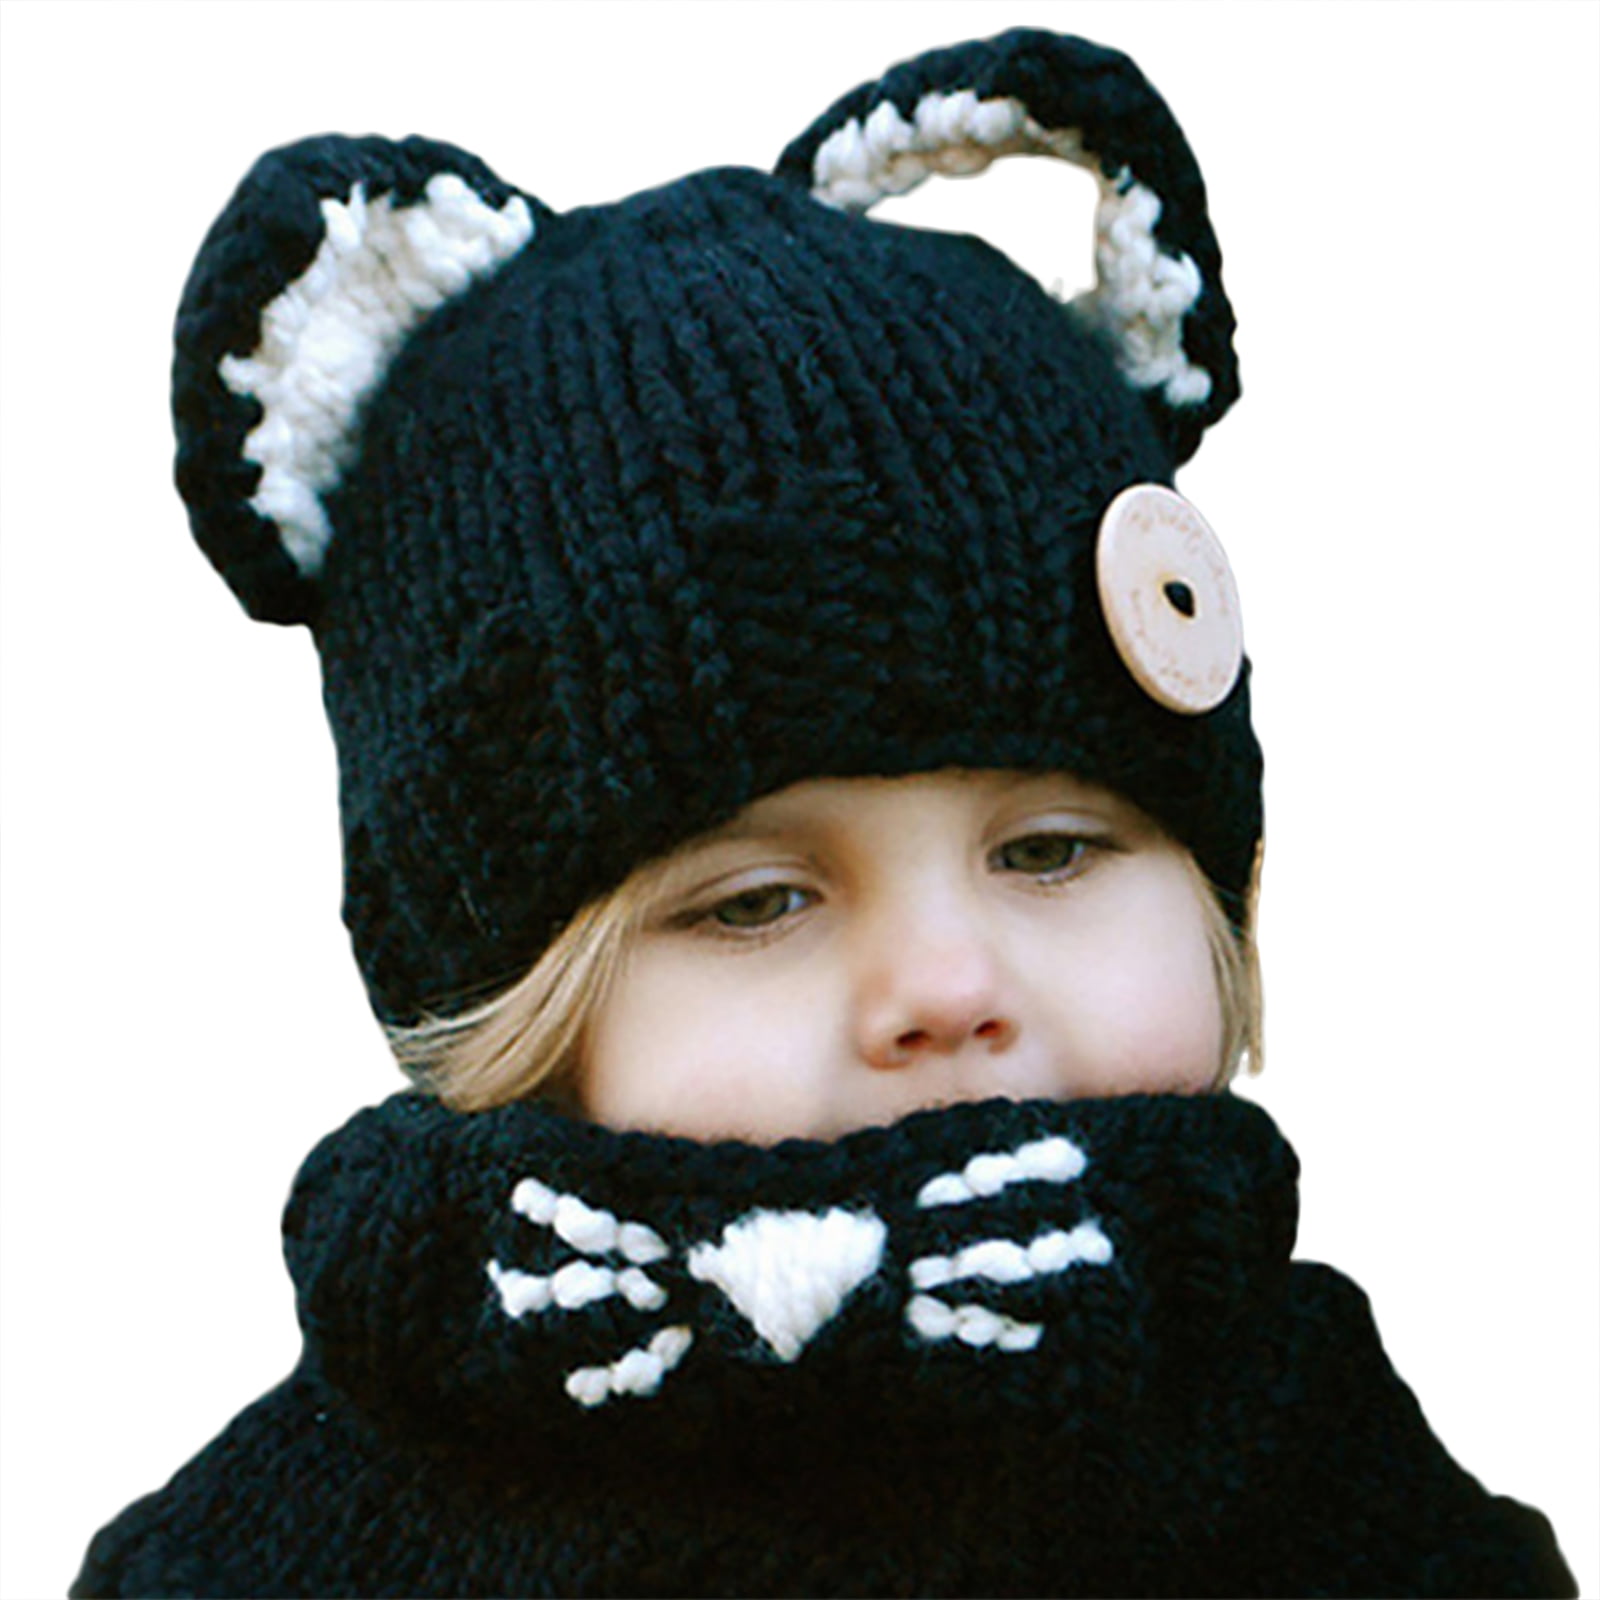 Fox Hat Ready to Ship Crochet Animal Hat Children/'s Hat